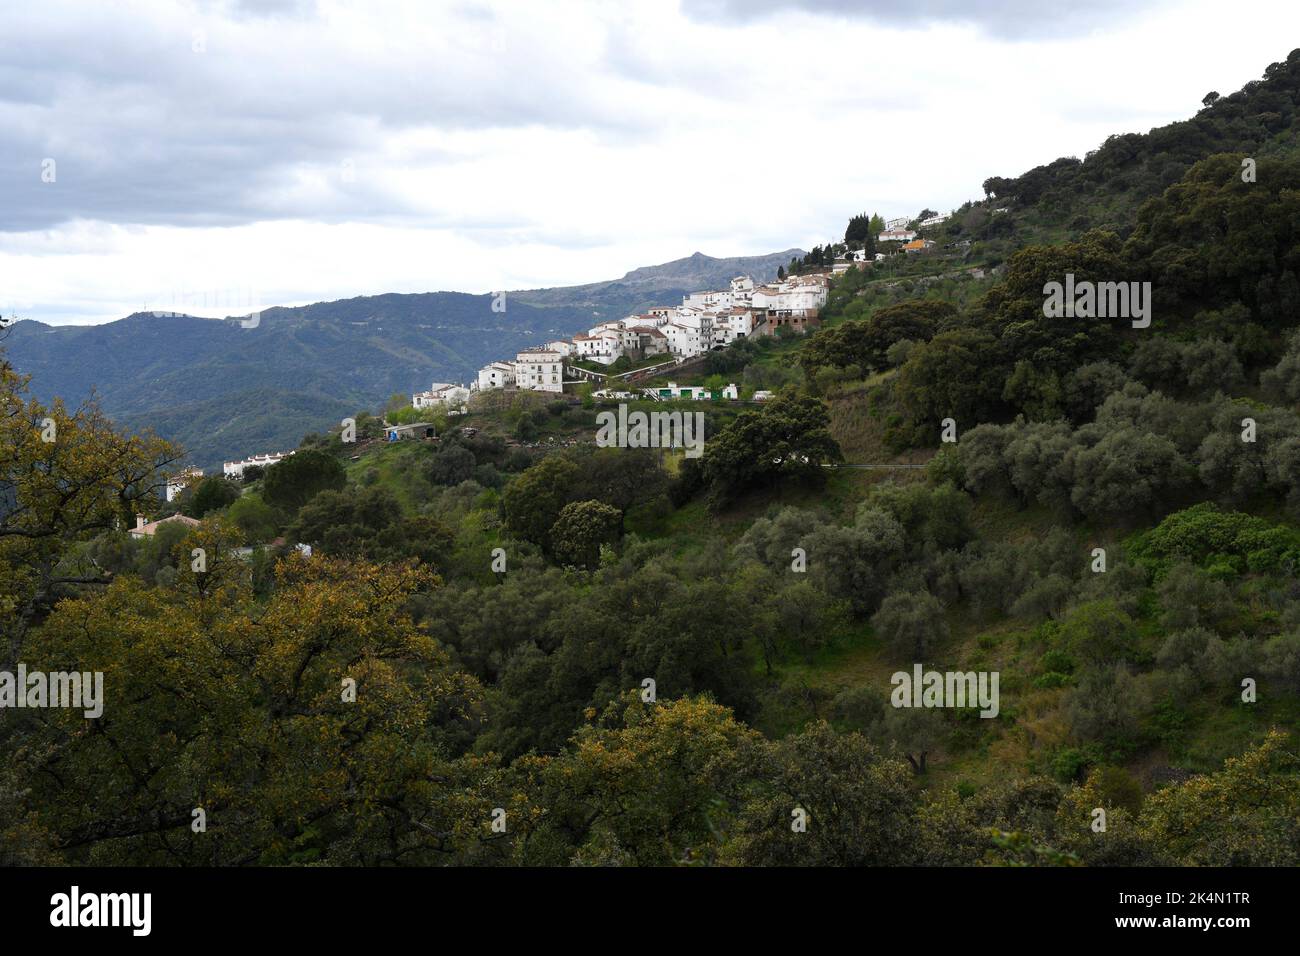 Jubrique, vista panoramica. Serranía de Ronda, Málaga, Andalusia, Spagna. Foto Stock